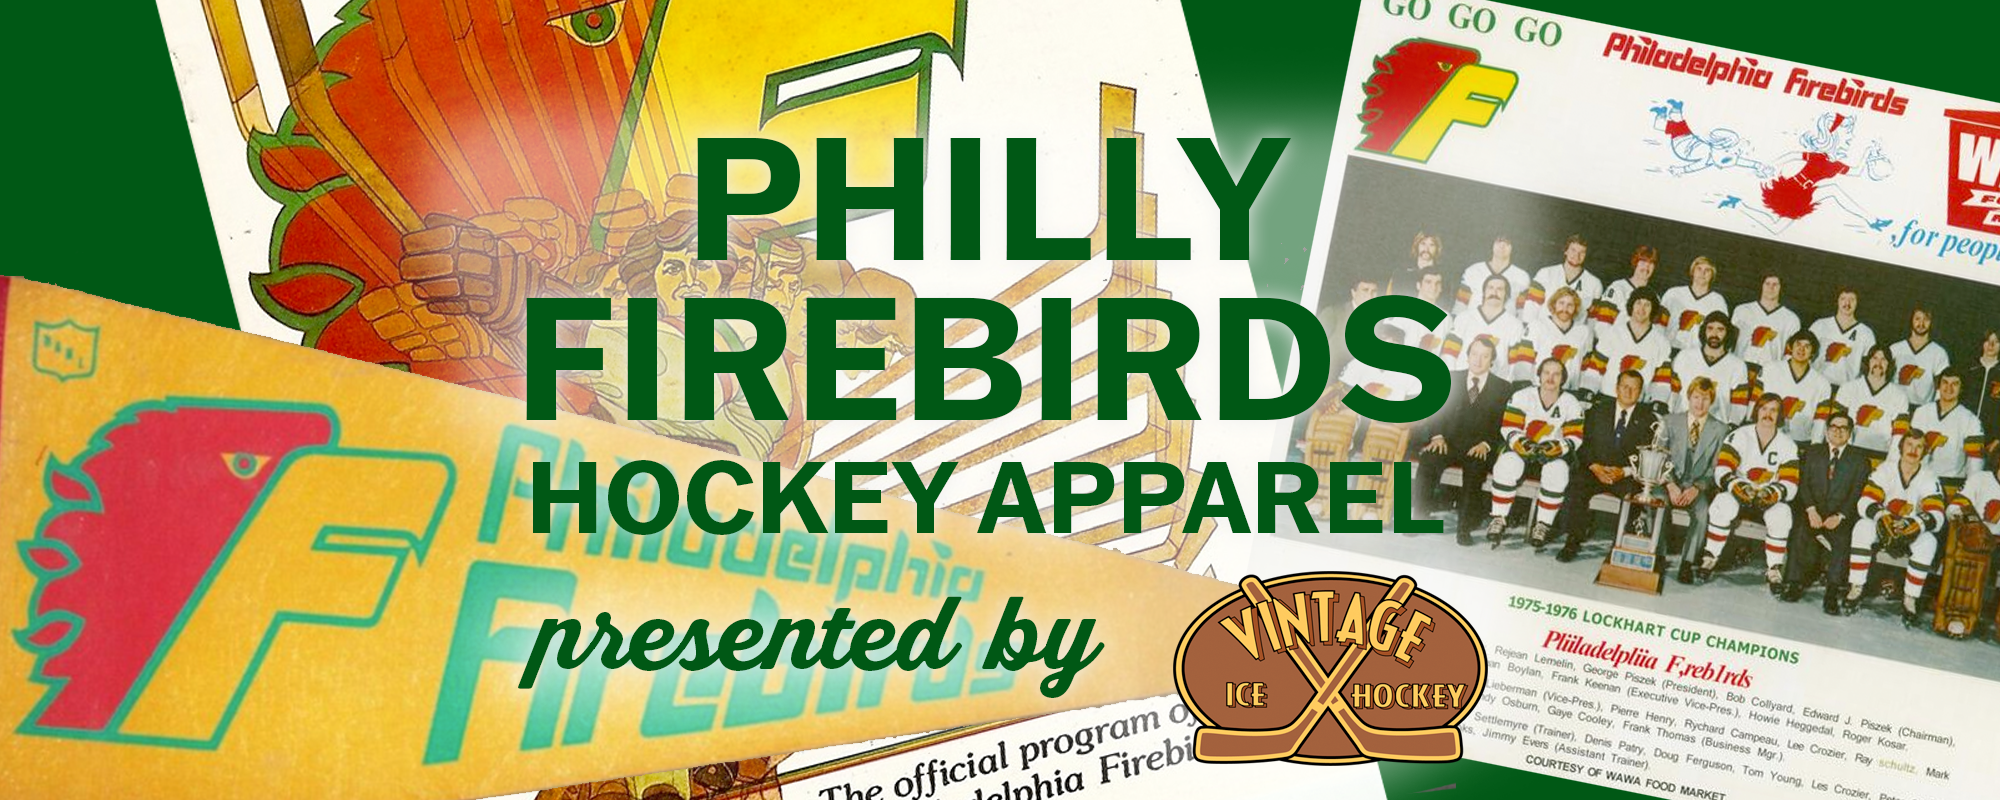 Shop Philadelphia Firebirds Hockey Apparel Presented by Vintage Ice Hockey